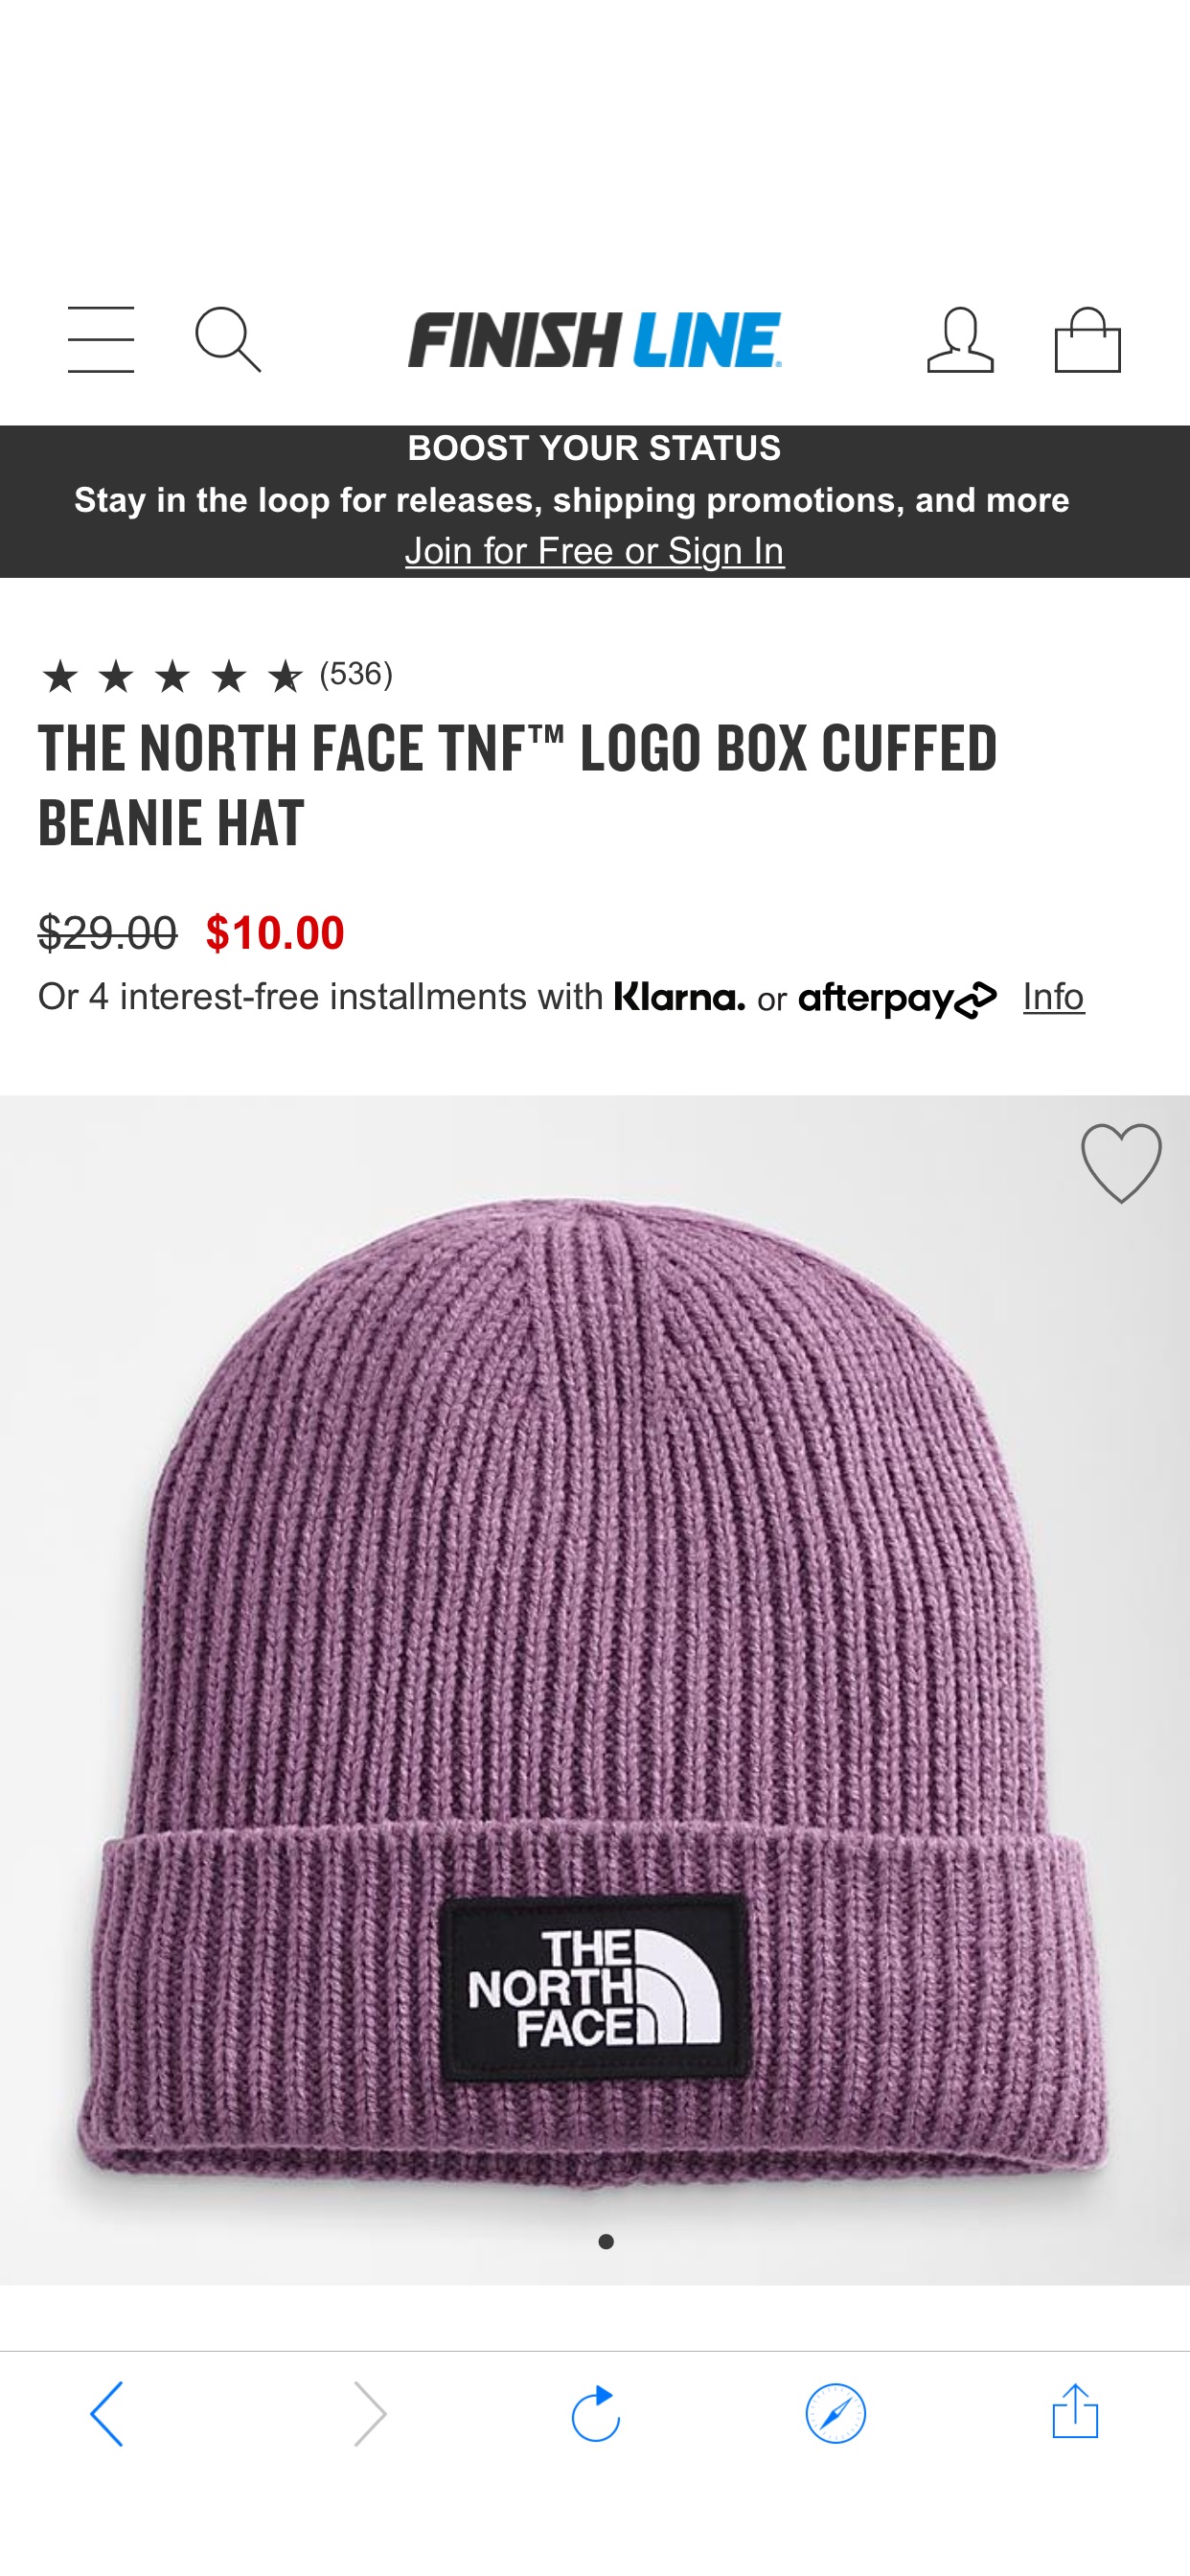 The North Face TNF™ Logo Box Cuffed Beanie Hat| Finish Line帽子